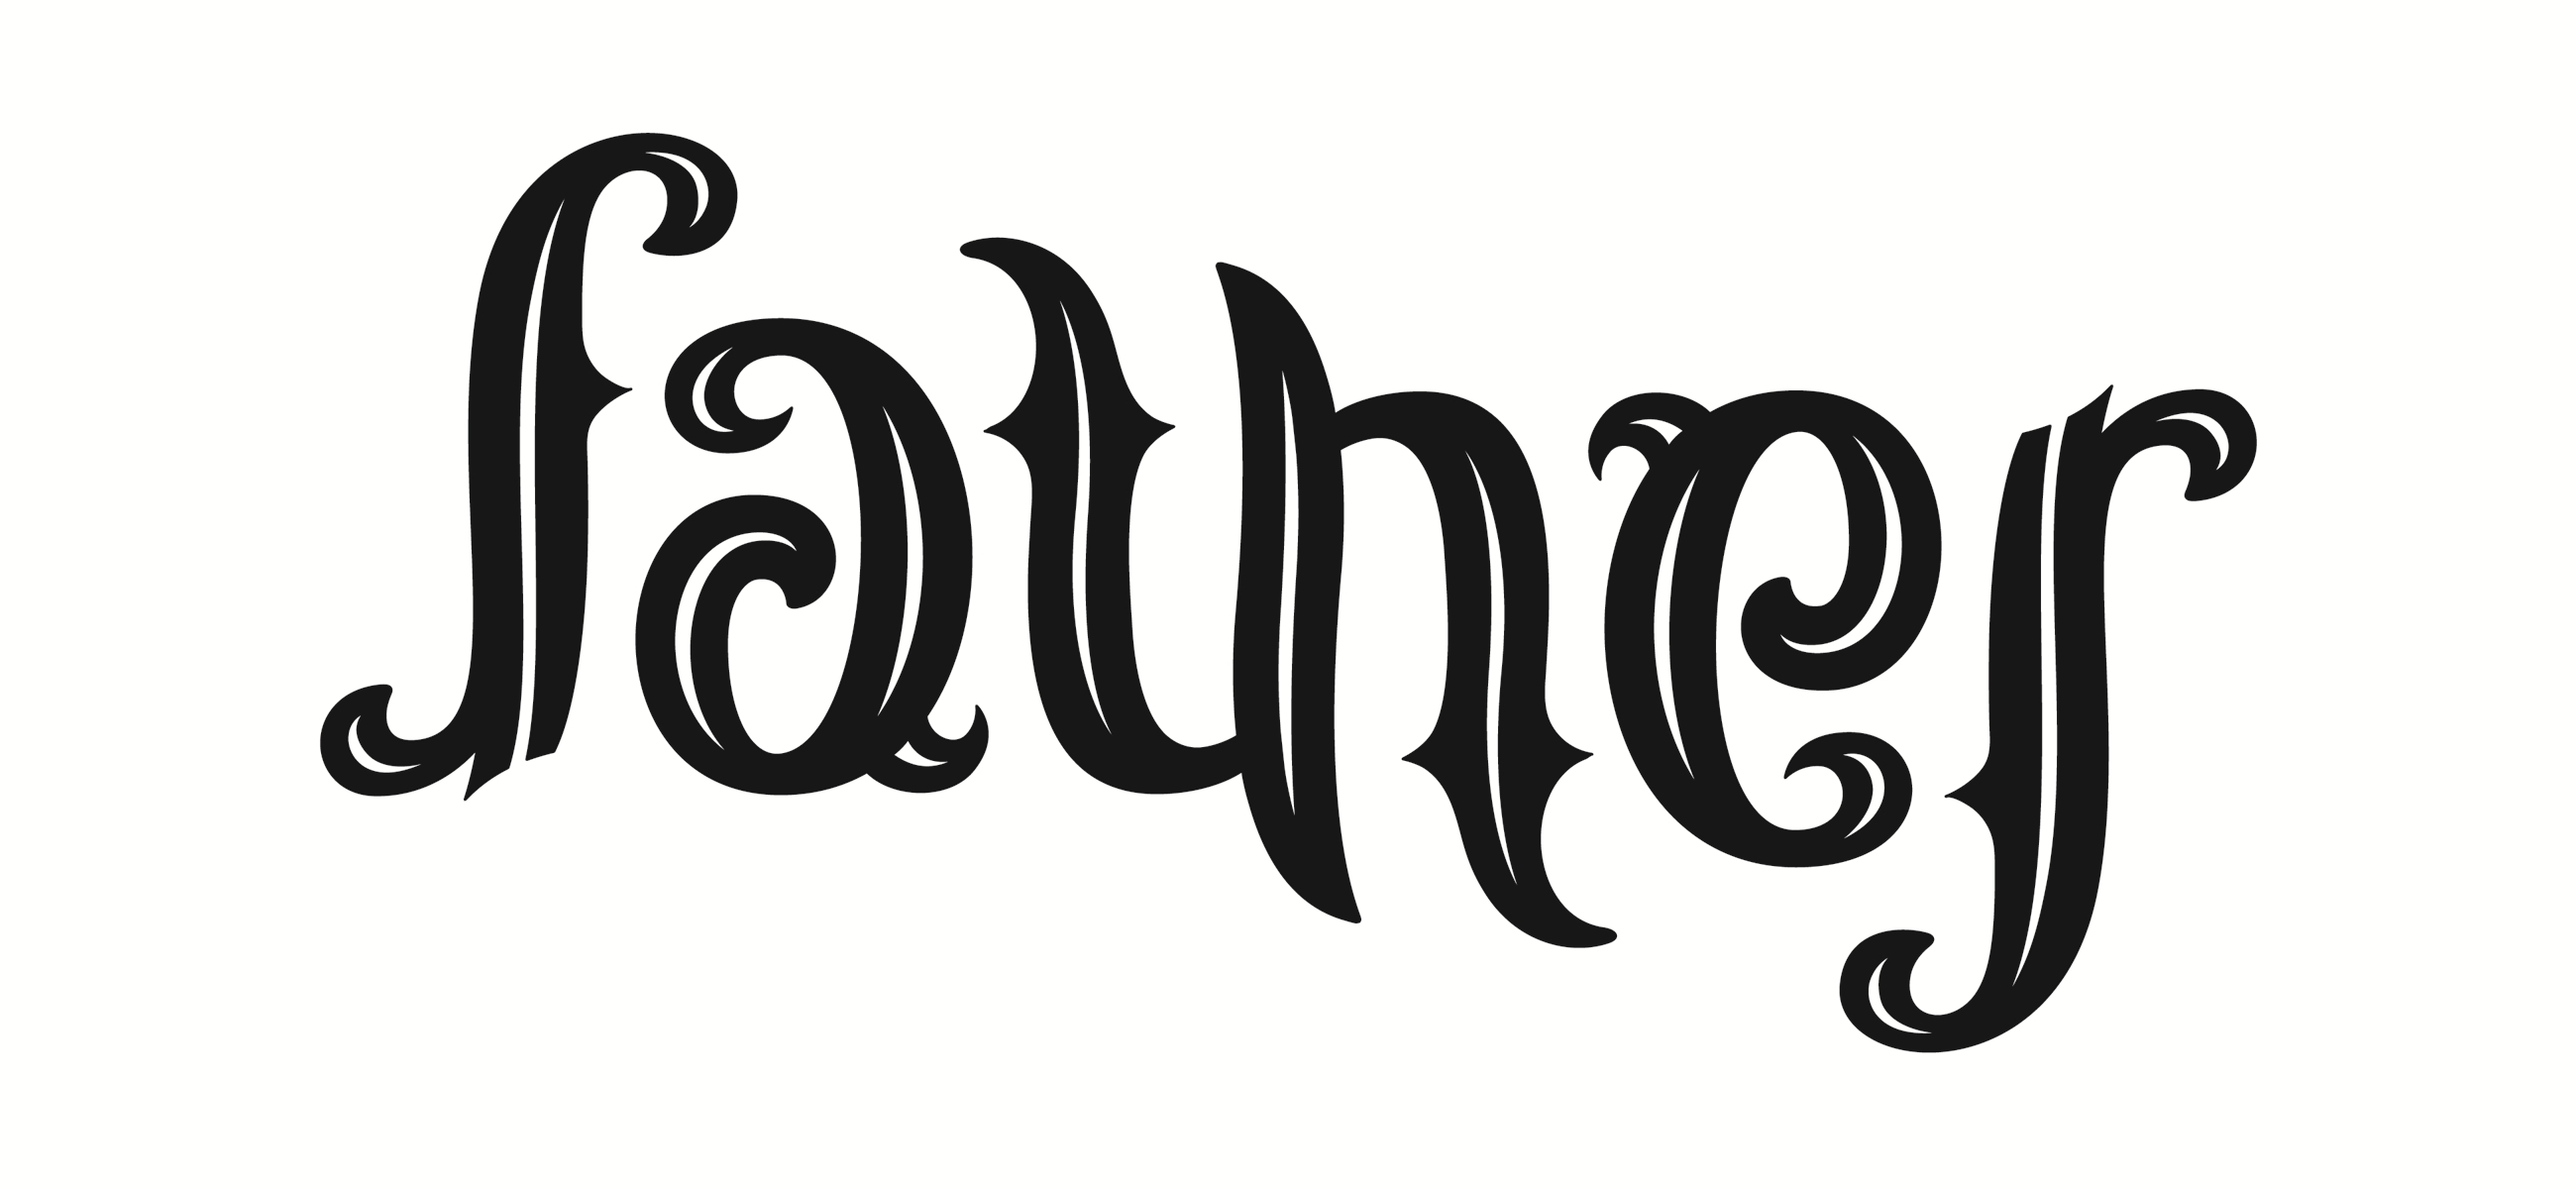 Free Ambigram Generator - Ambigram Maker - wide 7